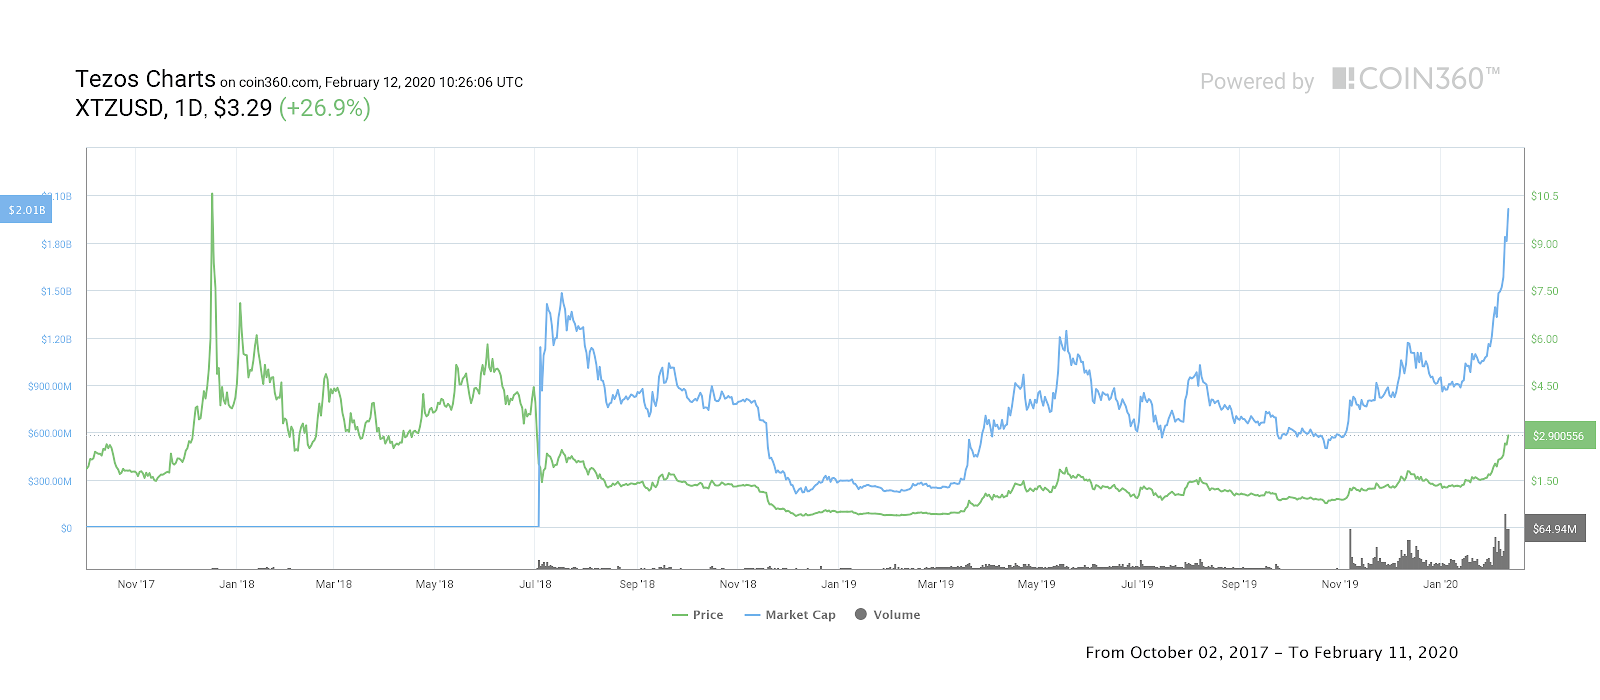 Tezos price chart, 2018-present